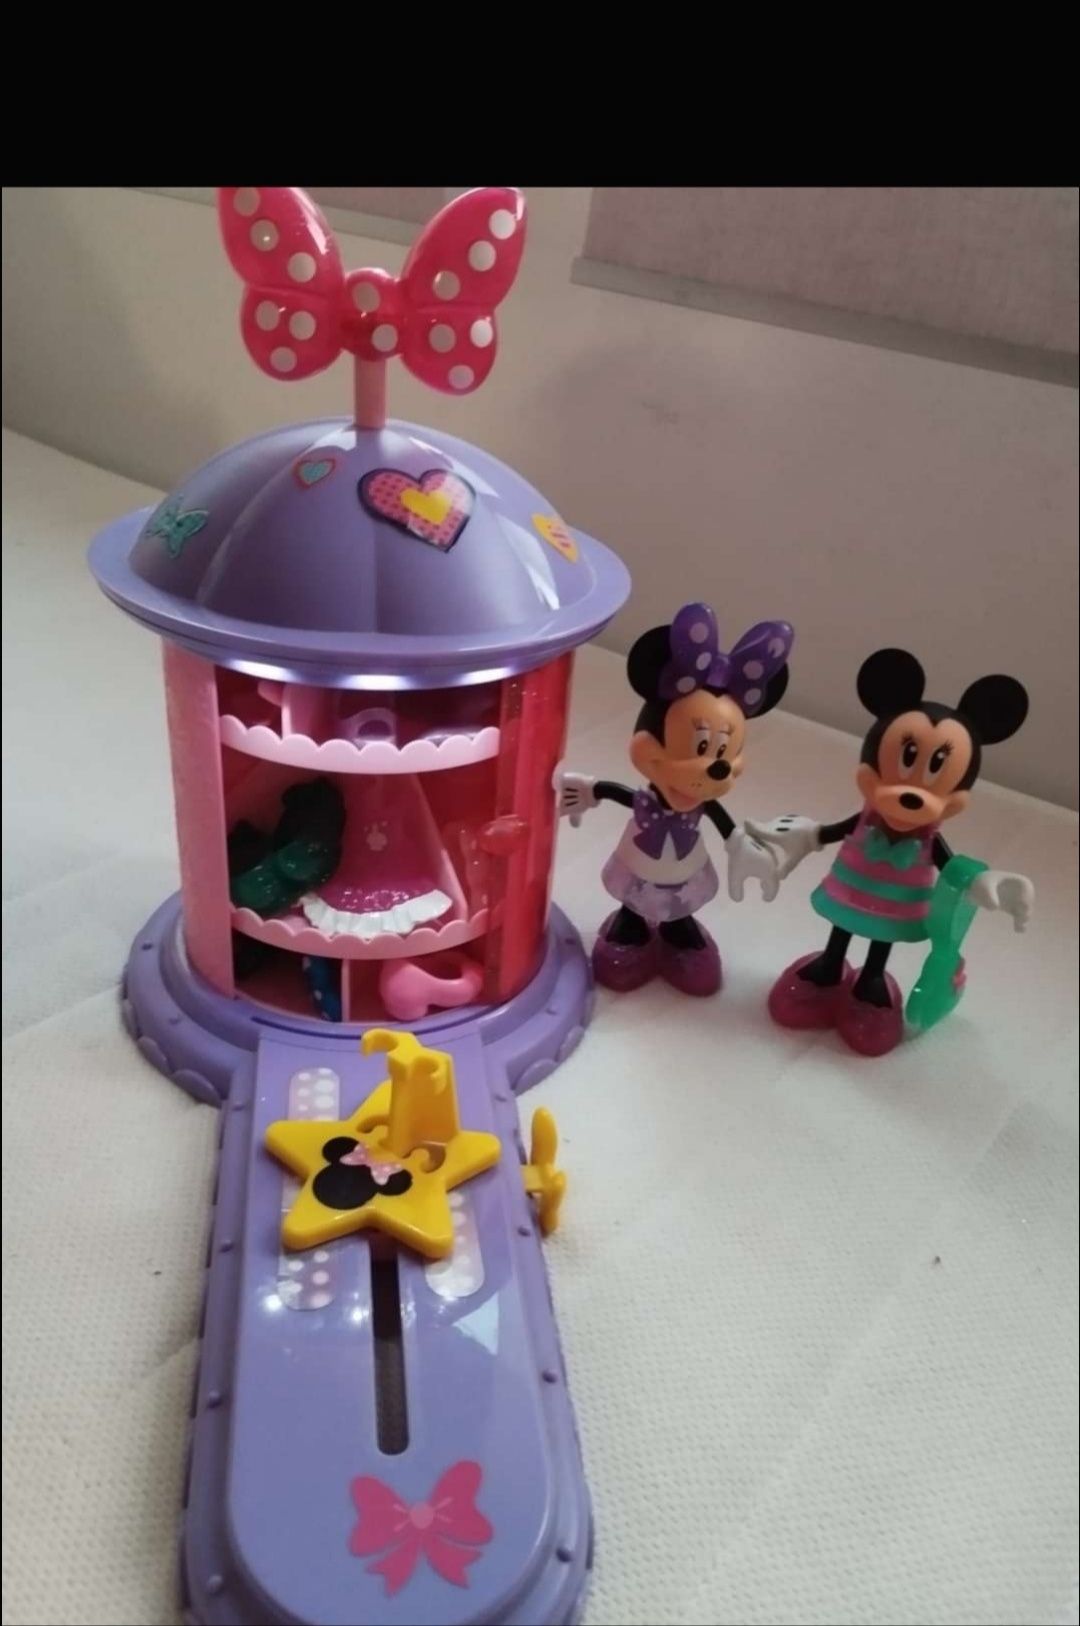 Brinquedo "Gira Estilos" da Minnie